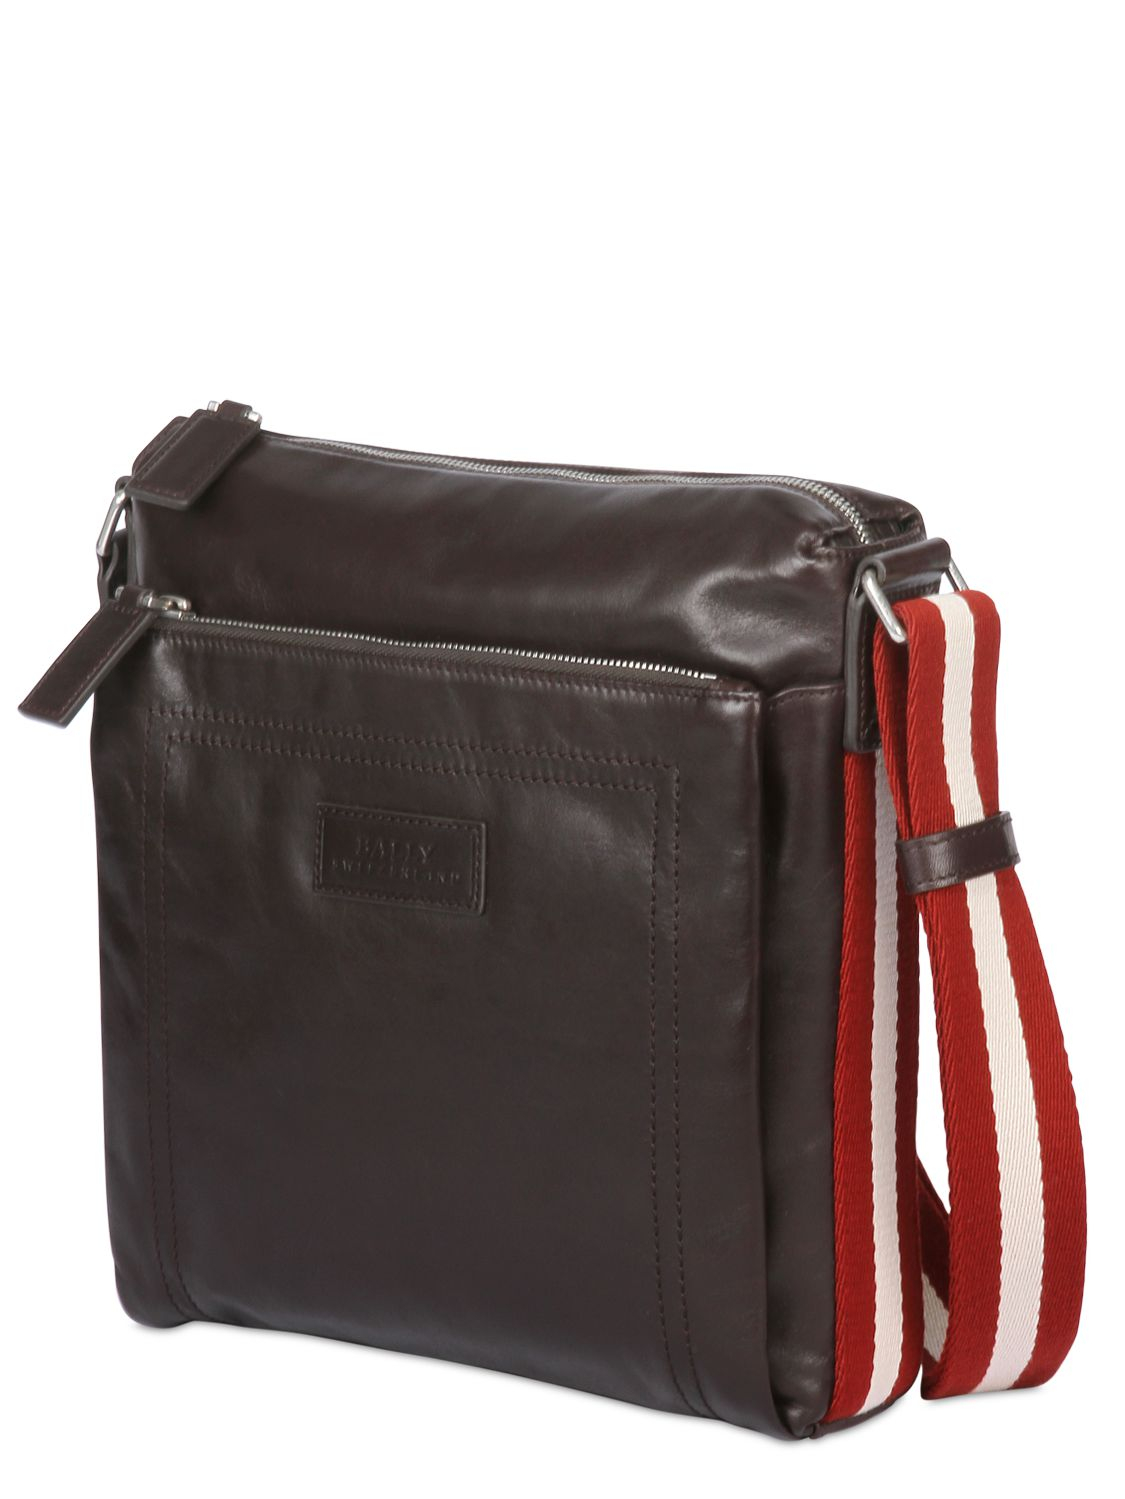 Bally Leather Crossbody Bag in Dark Brown (Brown) - Lyst